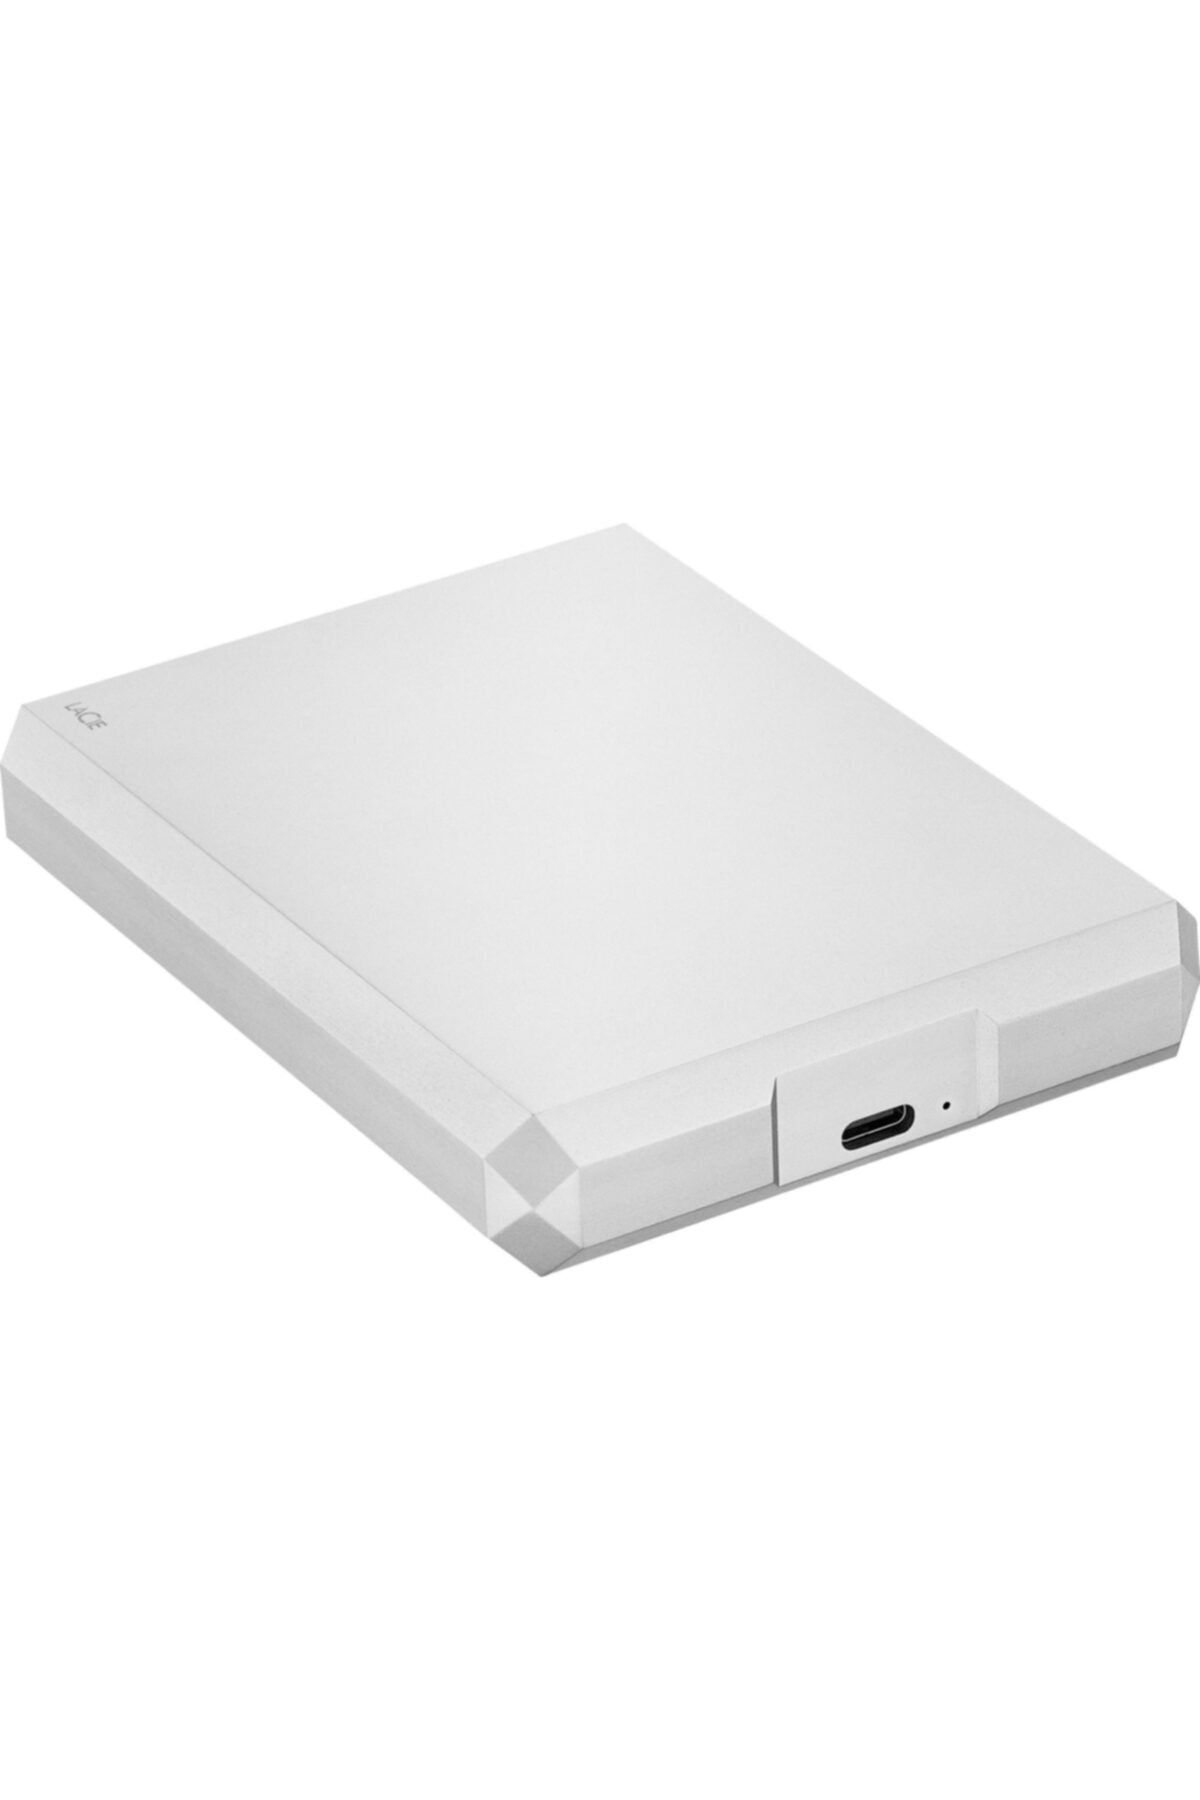 lacie Mobile Drive 4tb Sthg4000400 Taşınabilir Disk